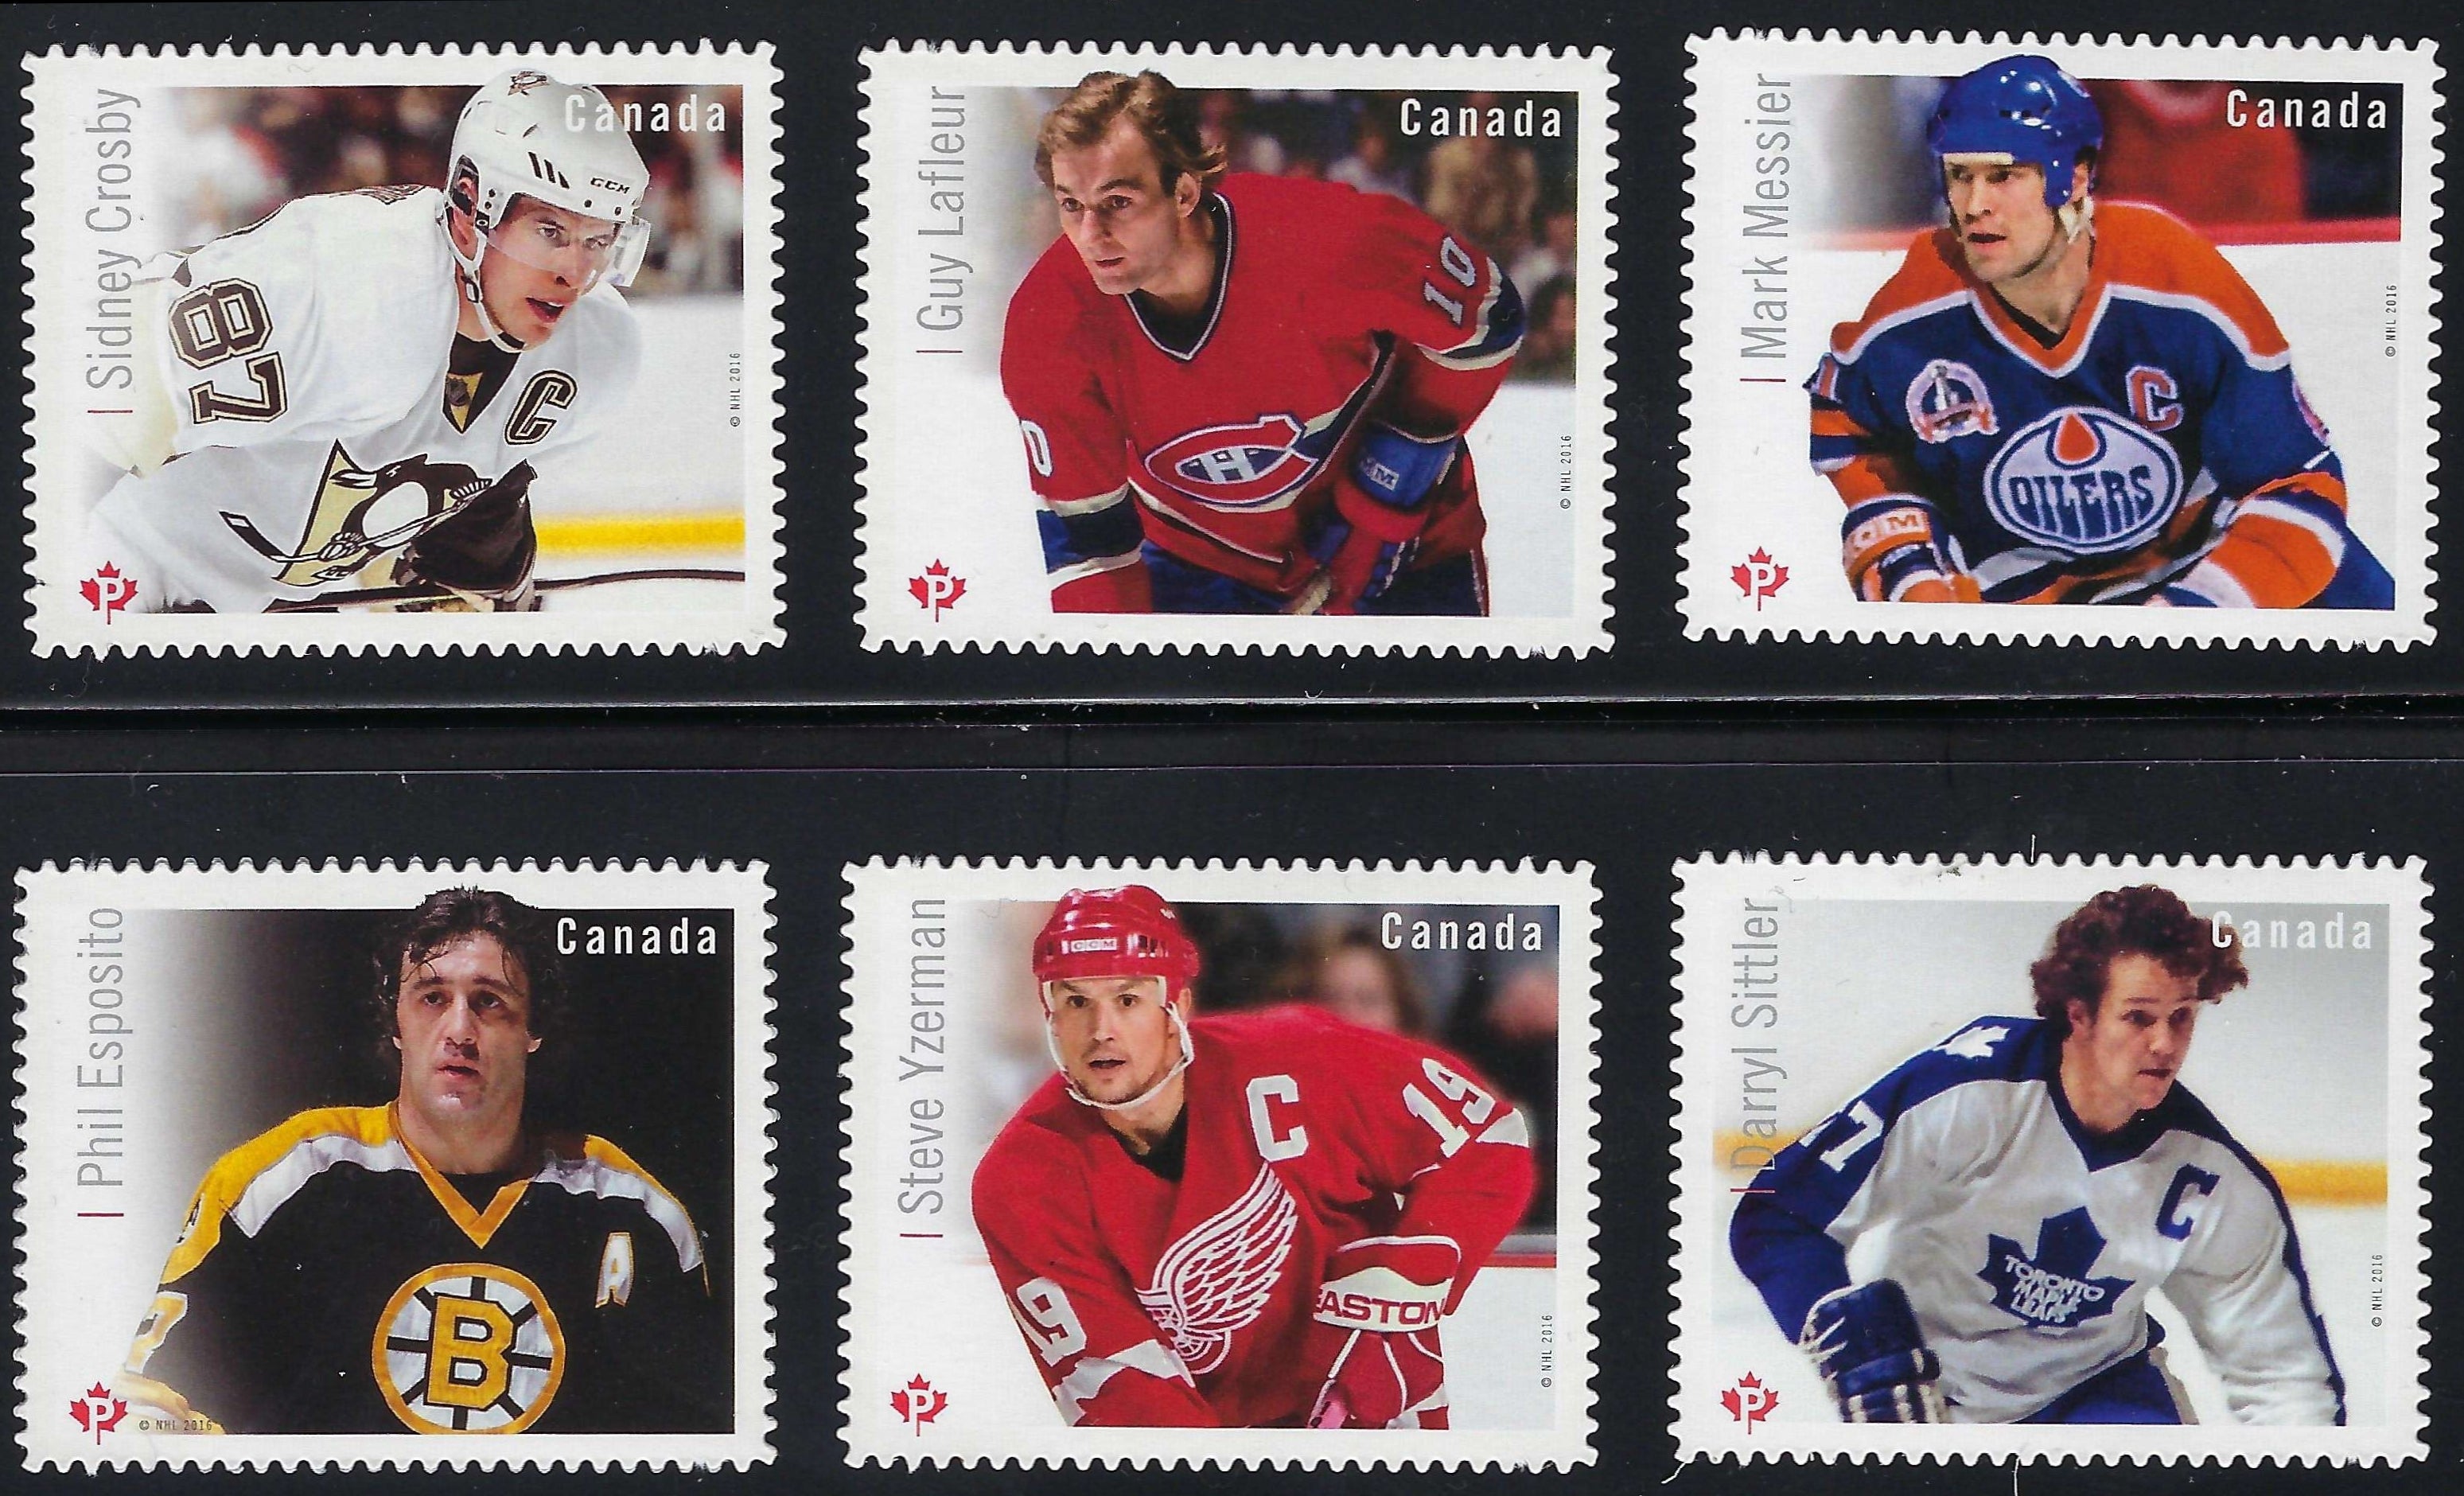 Steve Yzerman - Canada Postage Stamp